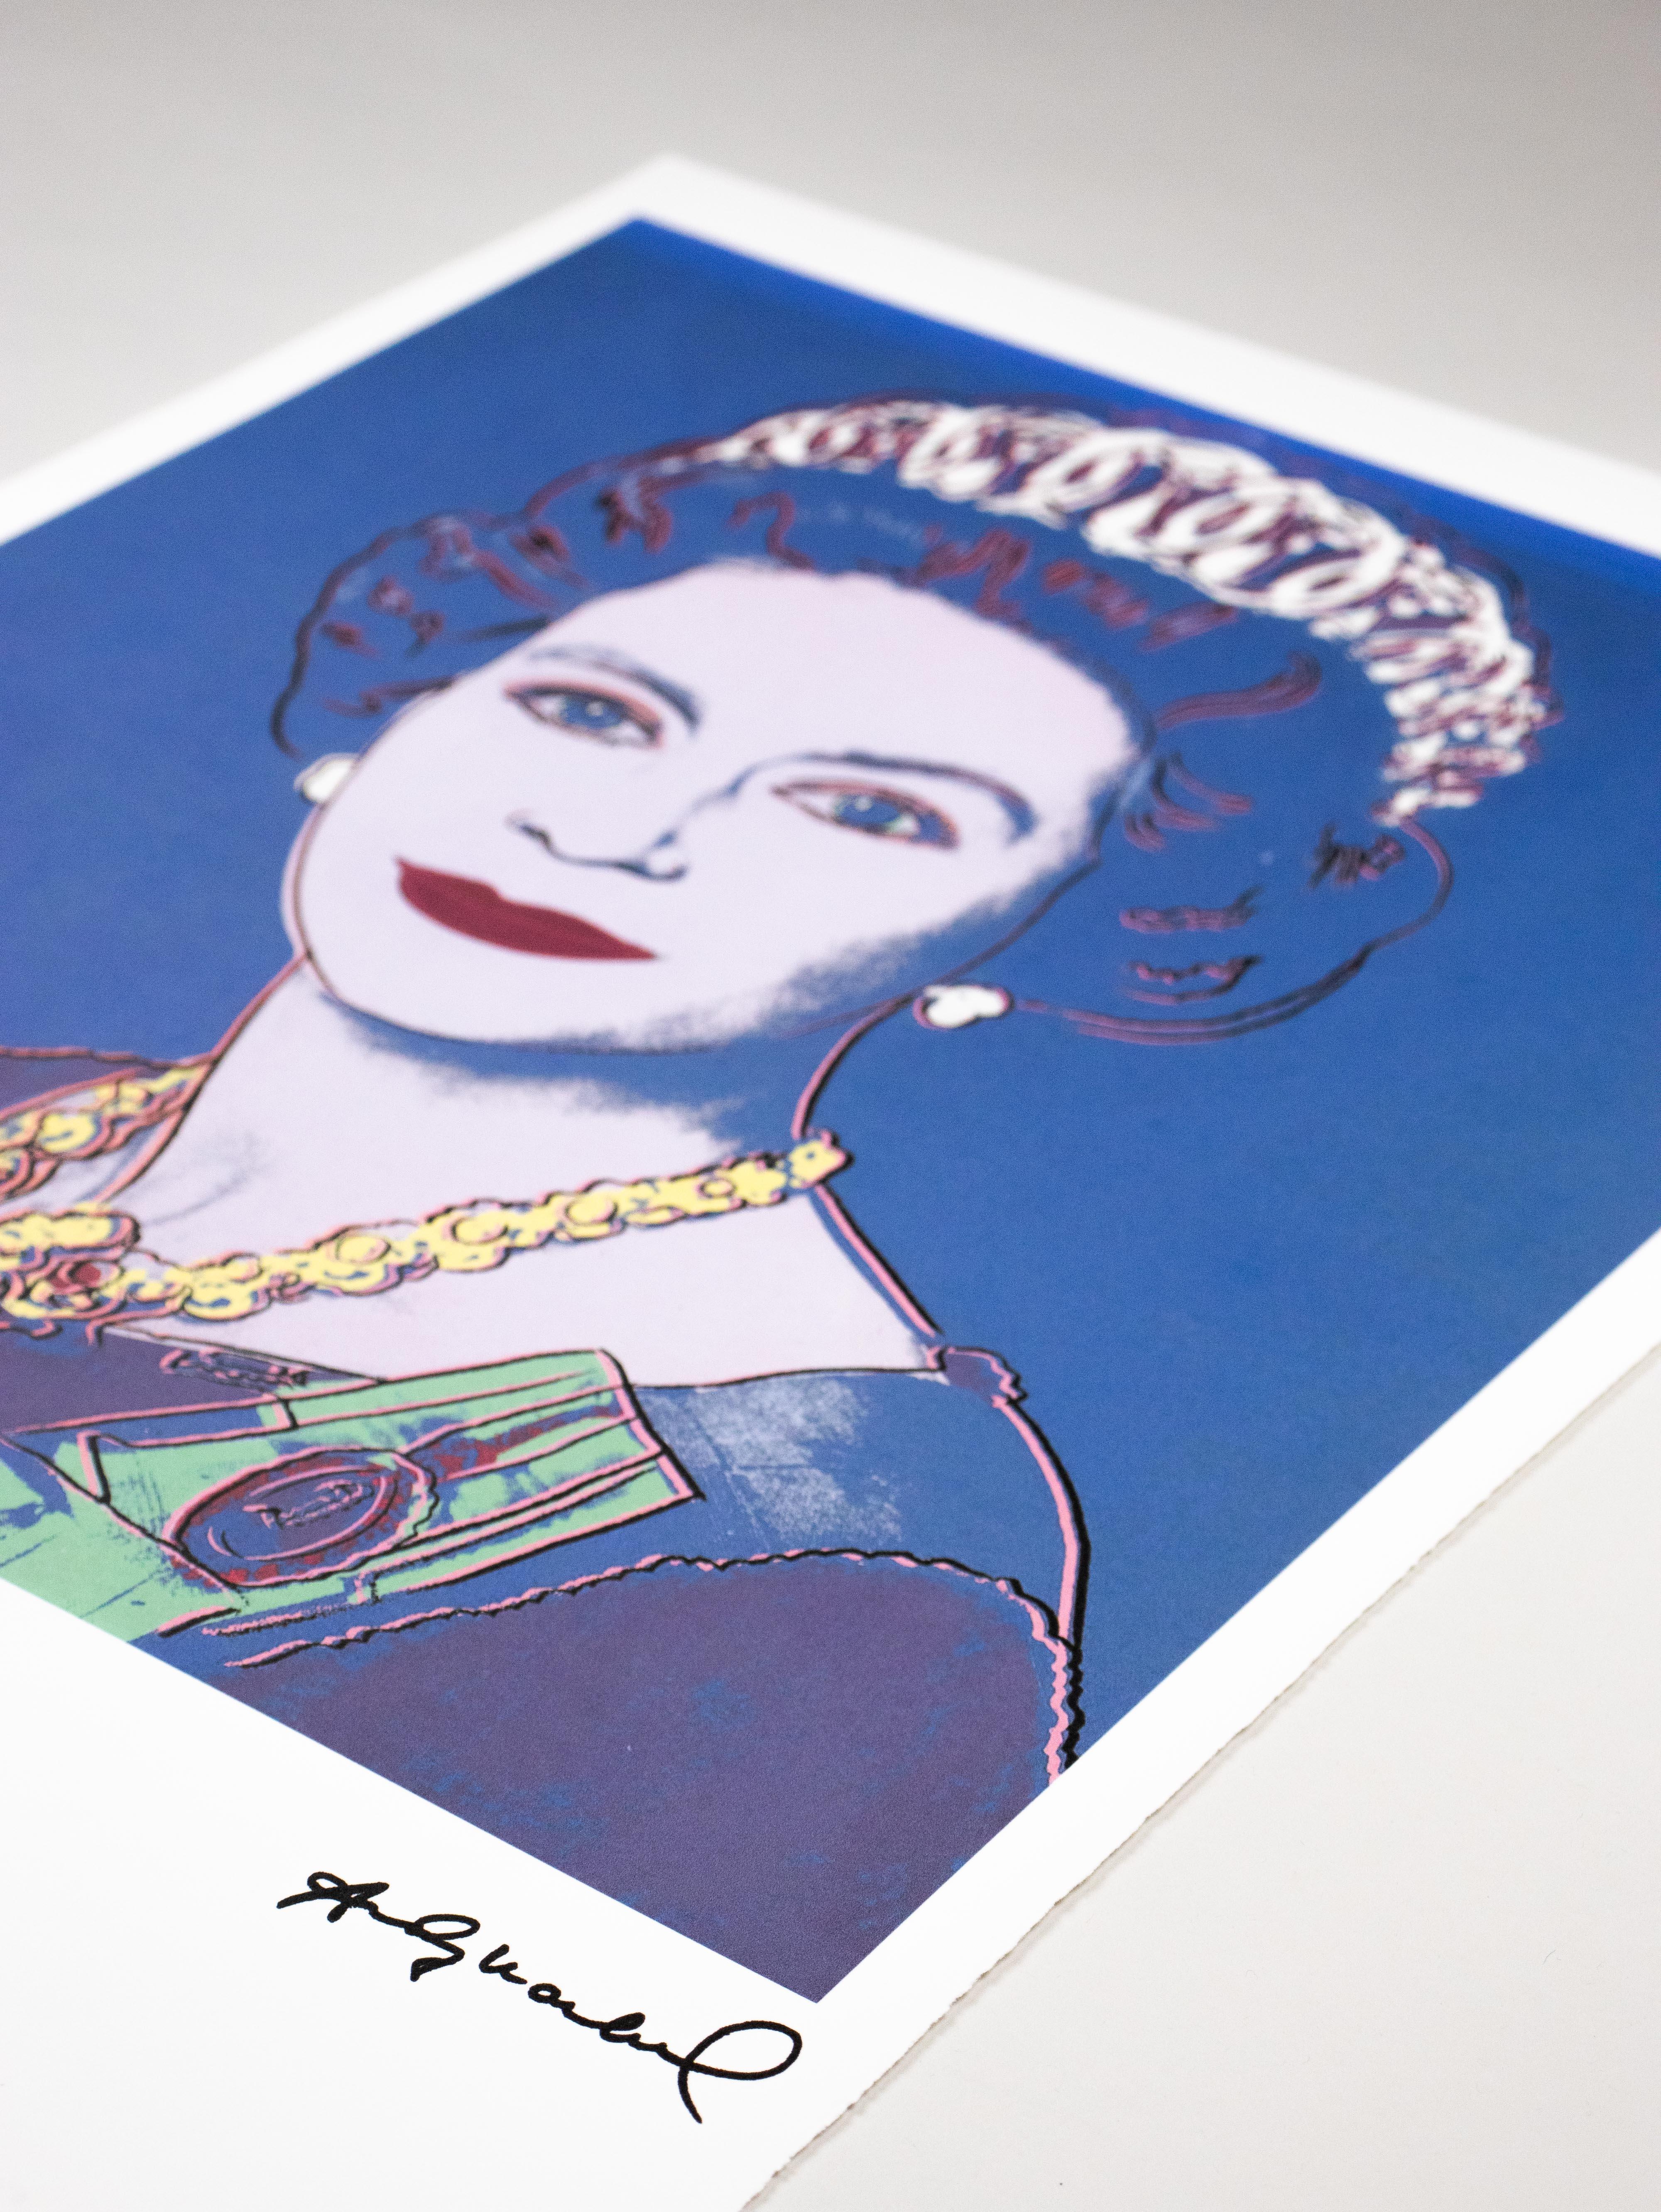 Queen Elizabeth II - 1983 - Original Lithograph - Limited Edition Print - 88/100 3